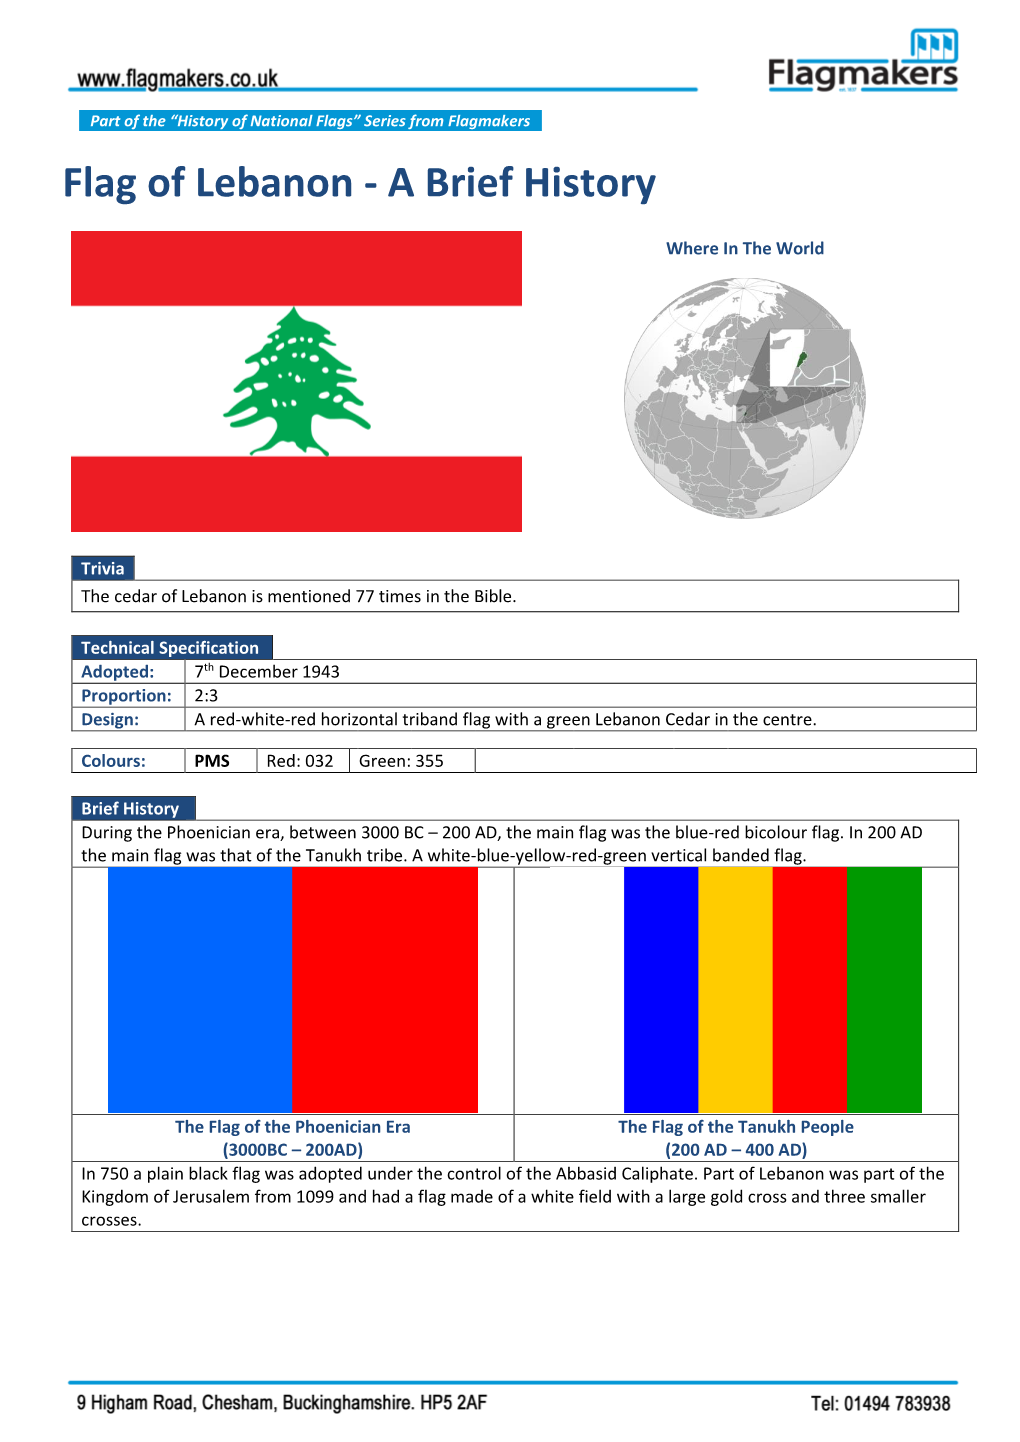 Flag of Lebanon - a Brief History